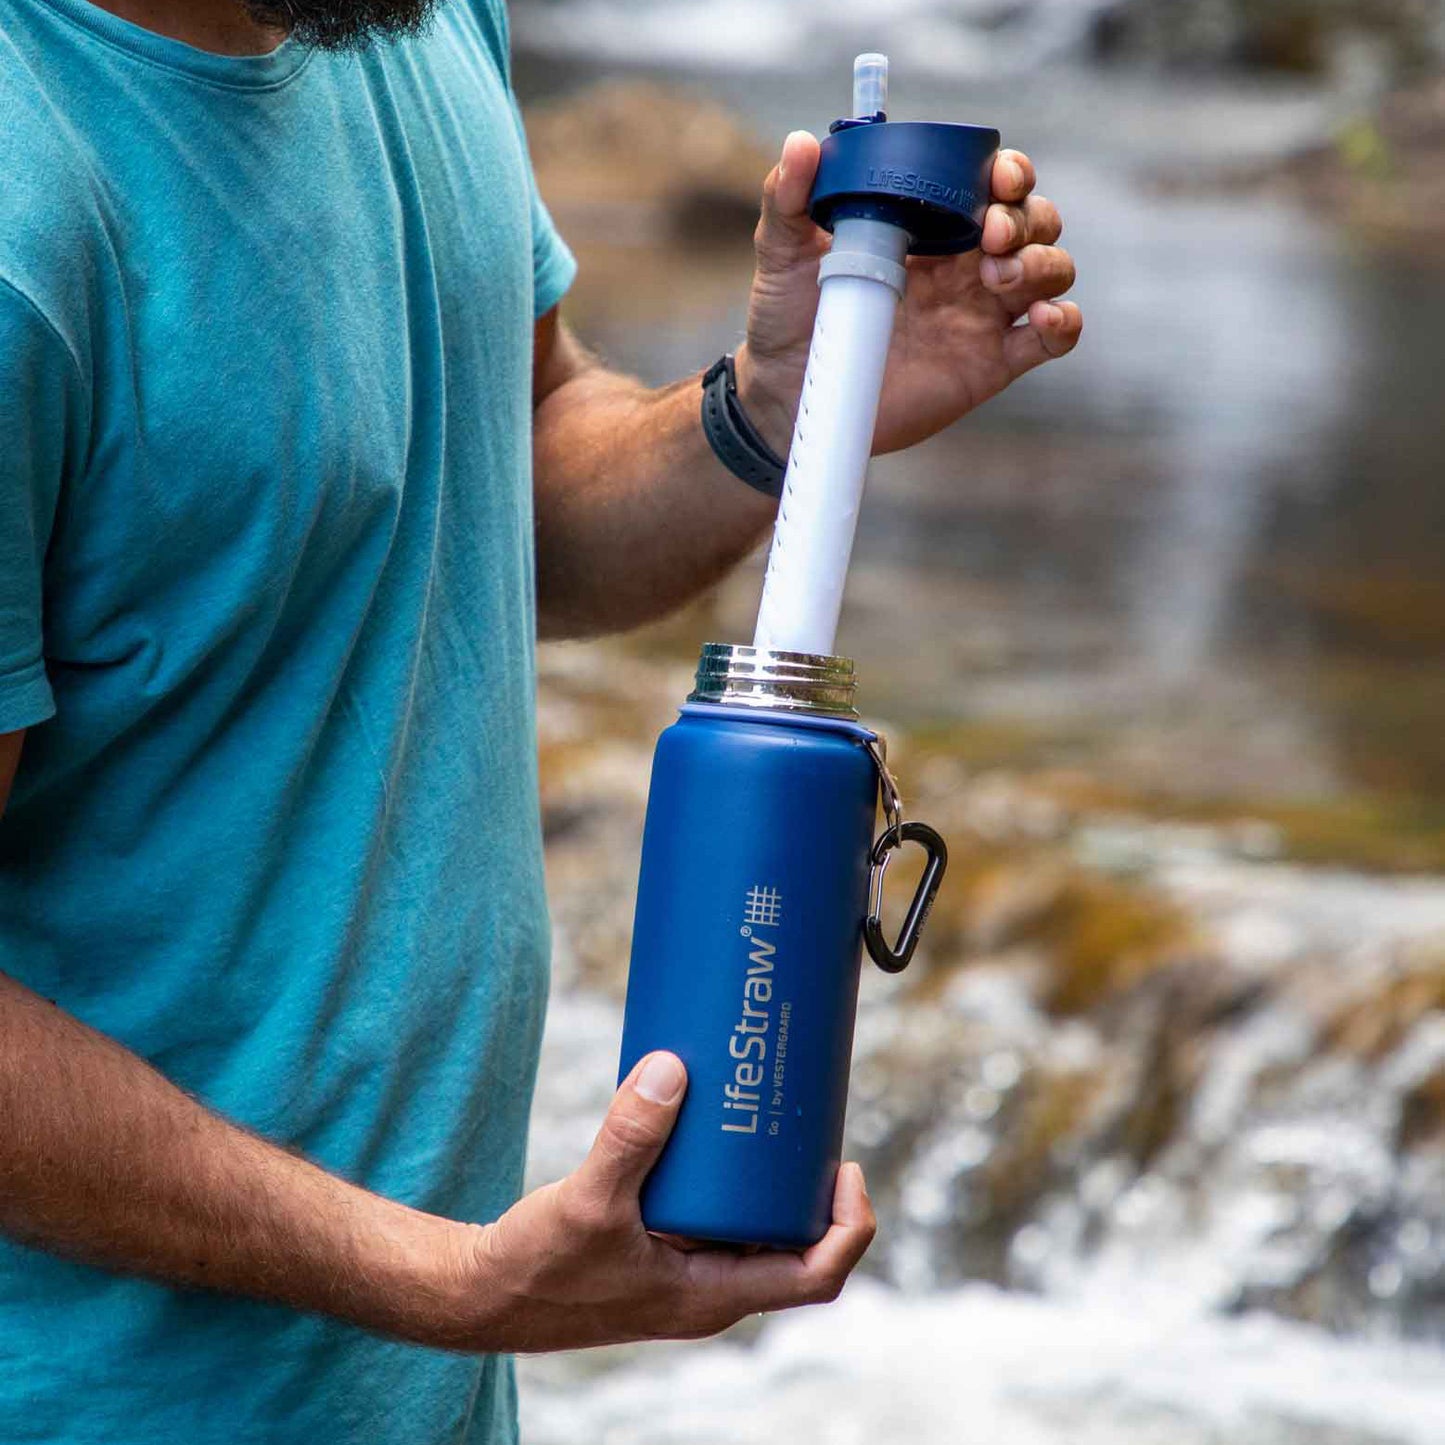 LifeStraw® Go Filter Water Bottle Steel, 700ml